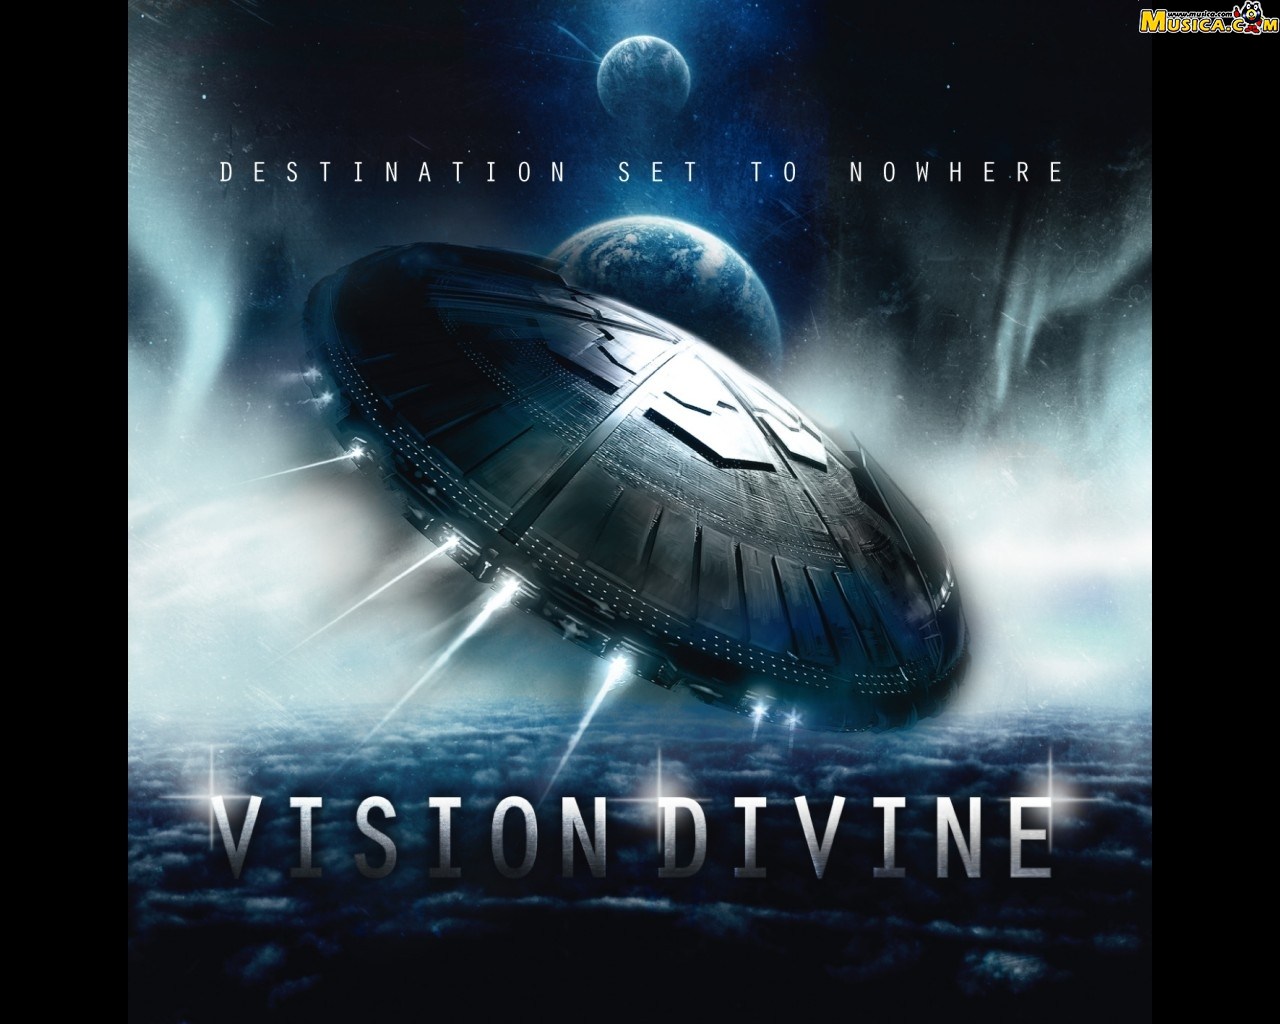 Fondo de pantalla de Vision Divine